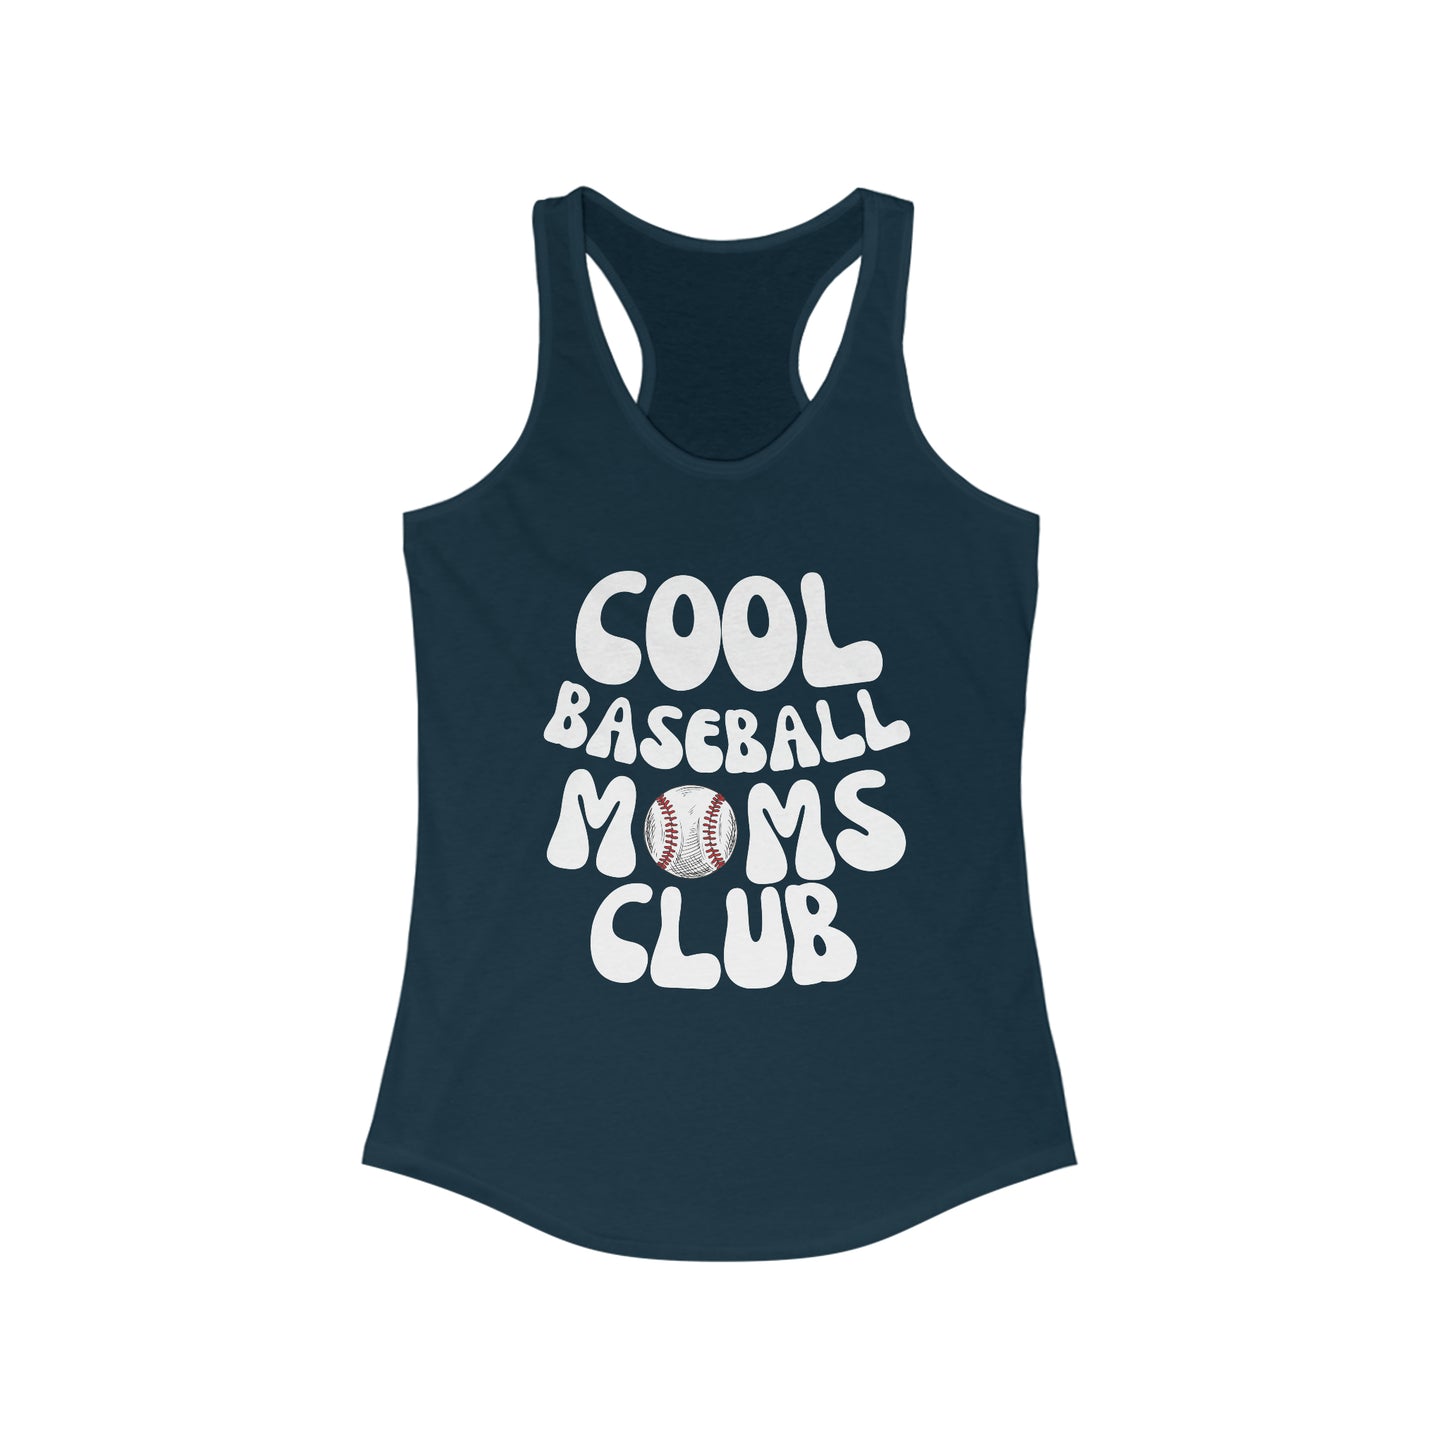 Cool Baseball Moms Club - Women's Ideal Racerback Tank